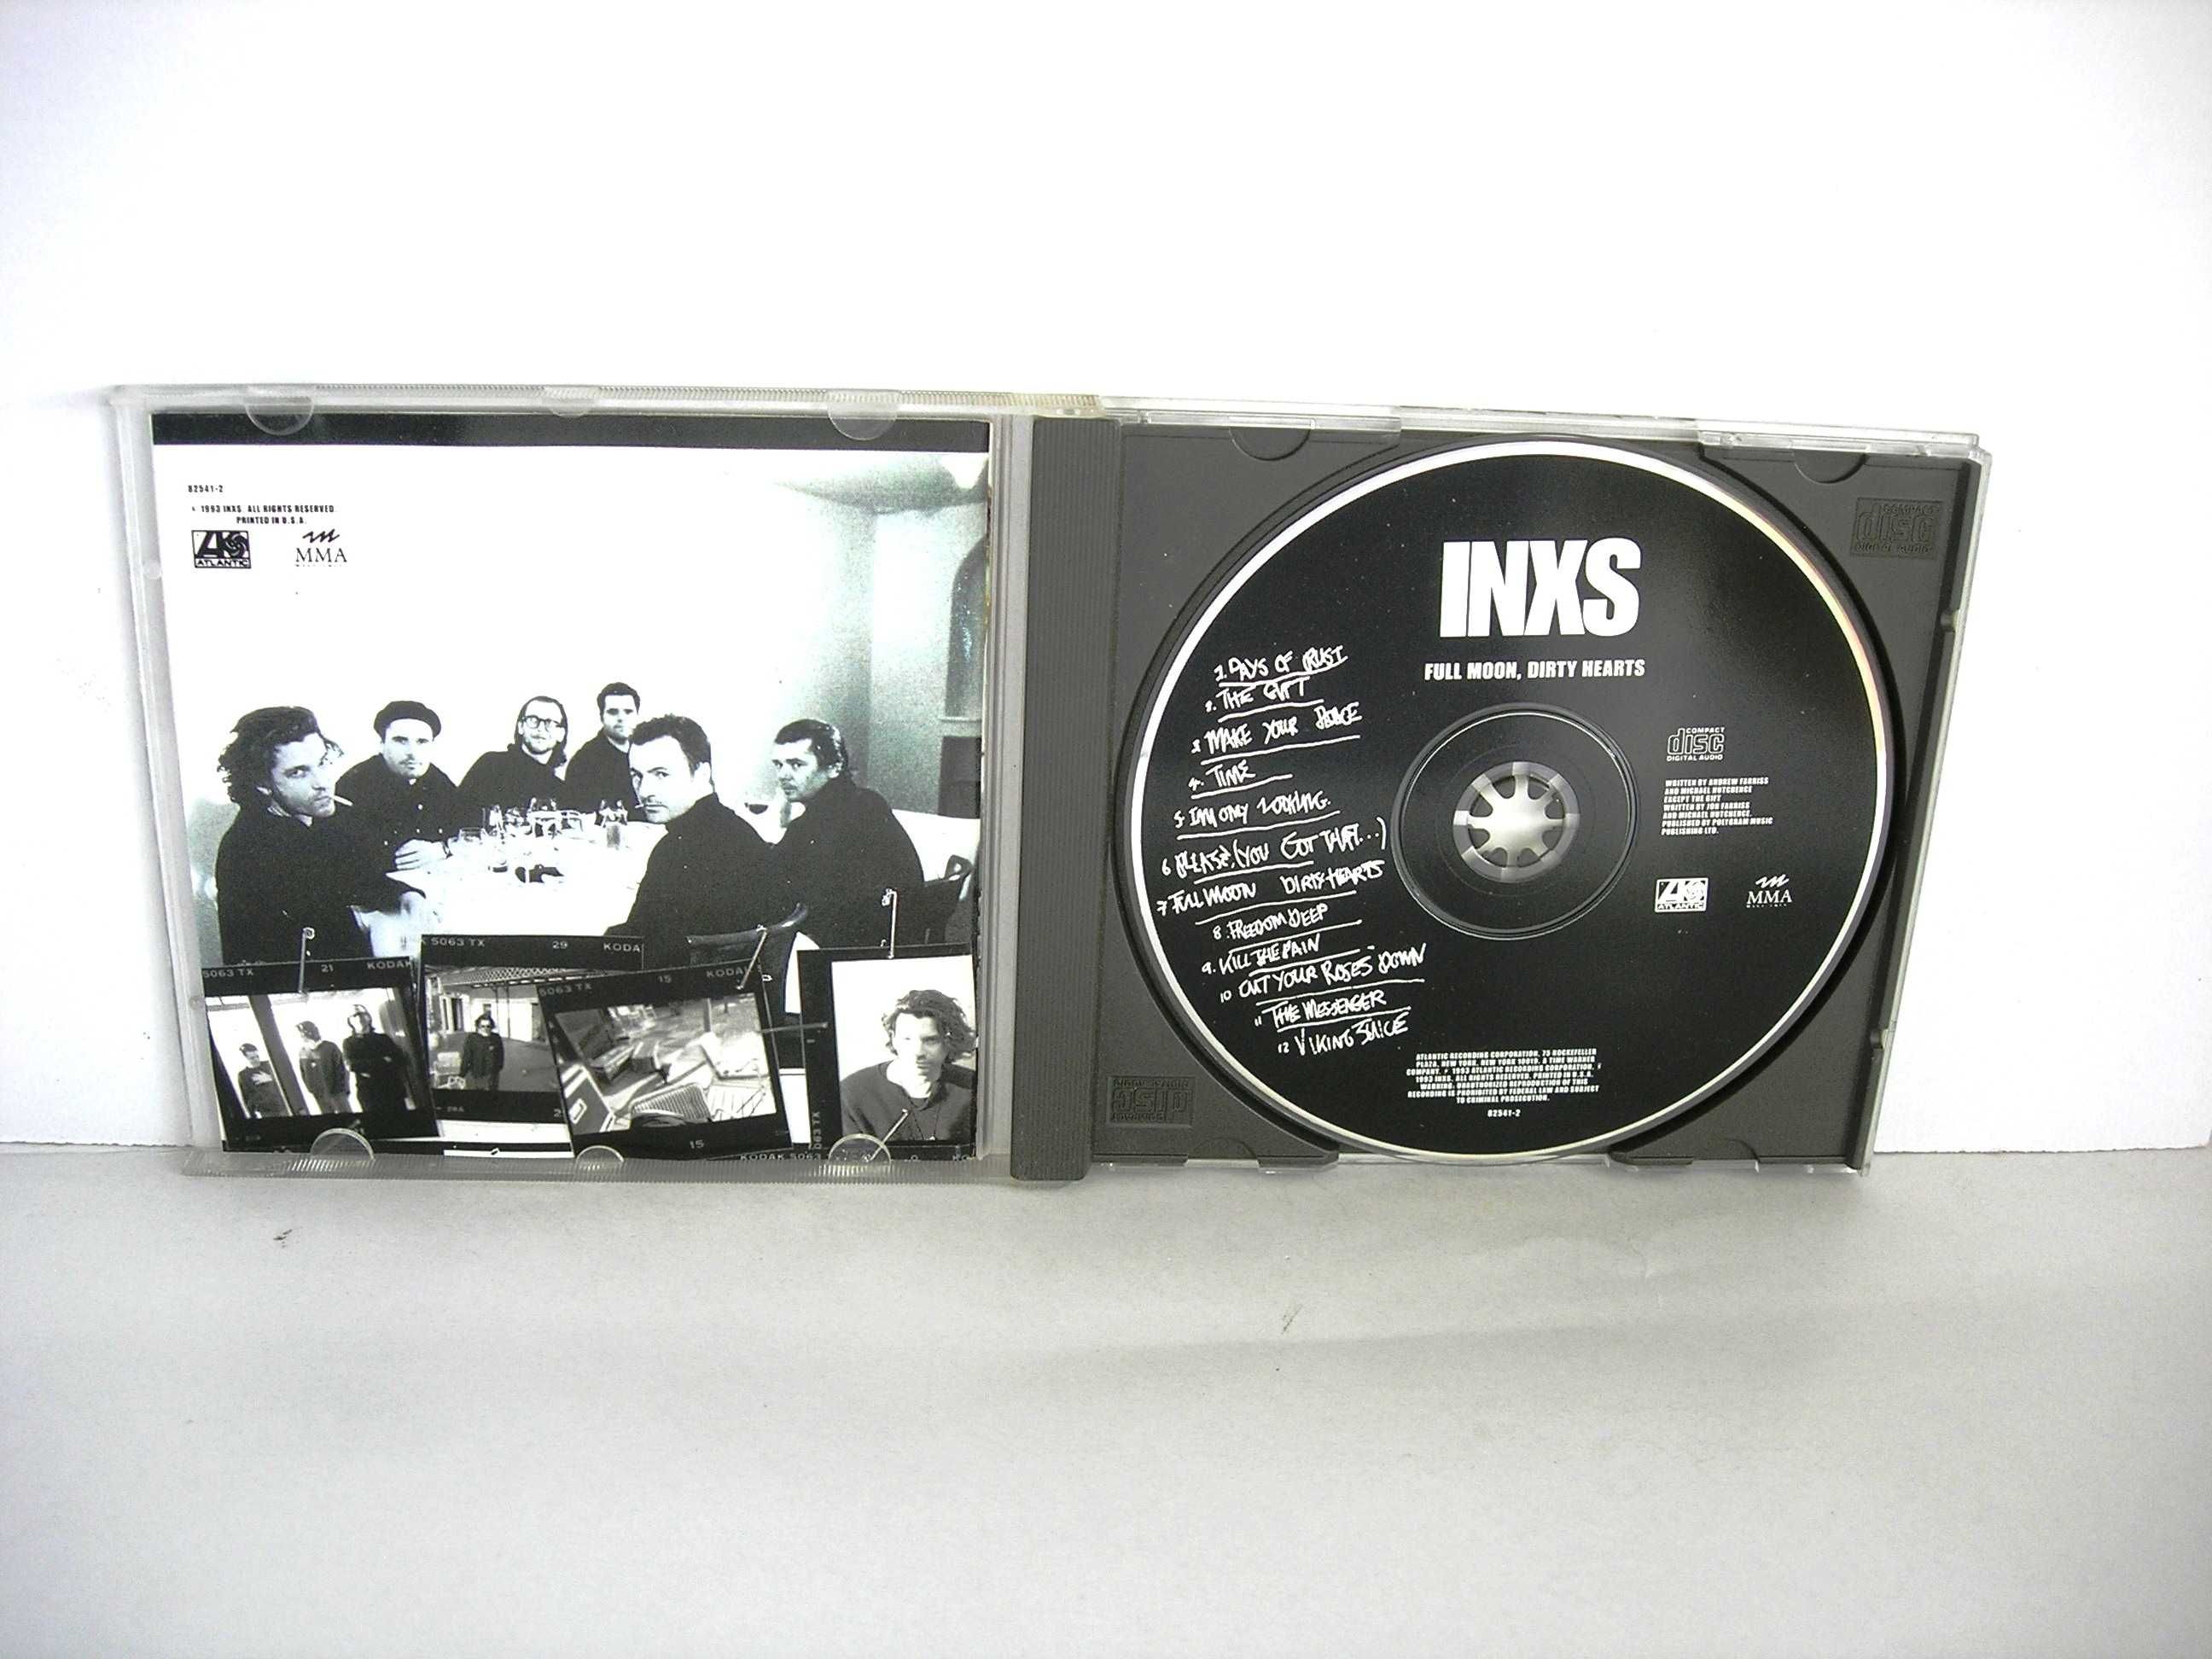 INXS "Full moon, dirty hearts" CD Atlantic Recording US 1993